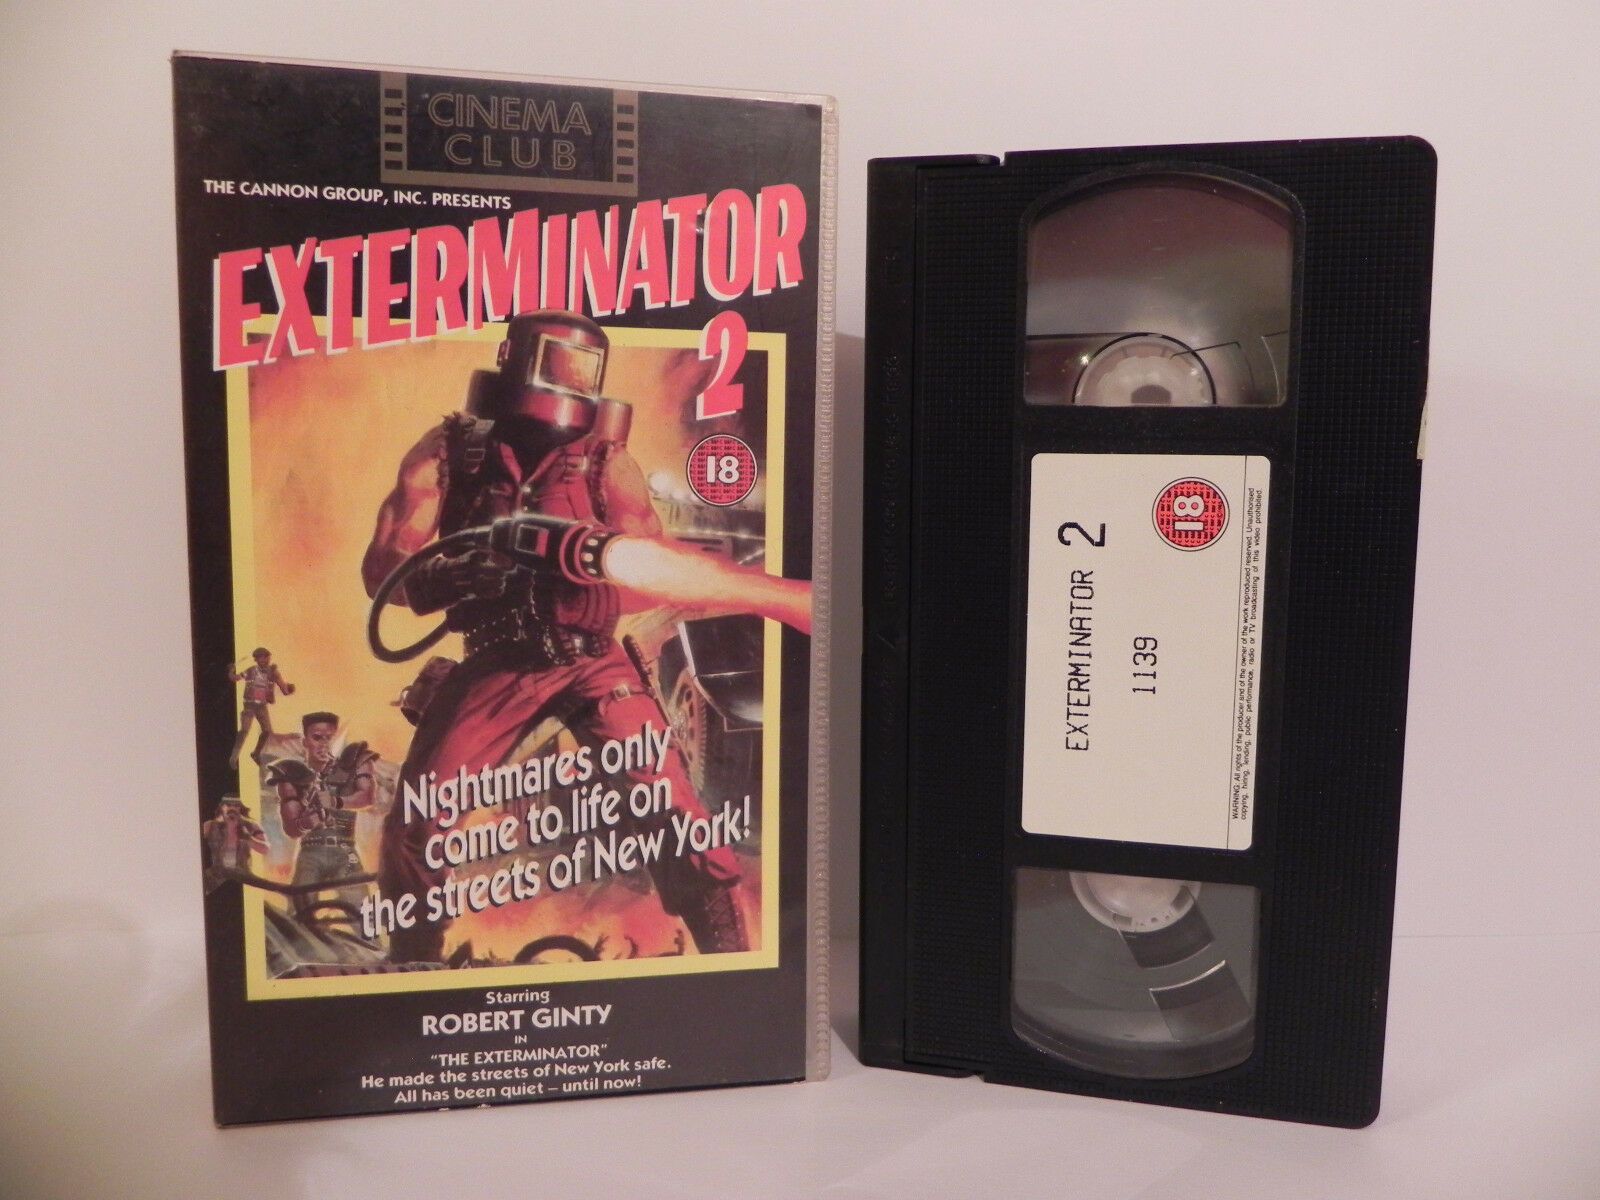 The Exterminator 2 - Cimema Club - Small Box - Video - Action Vengence - VHS-